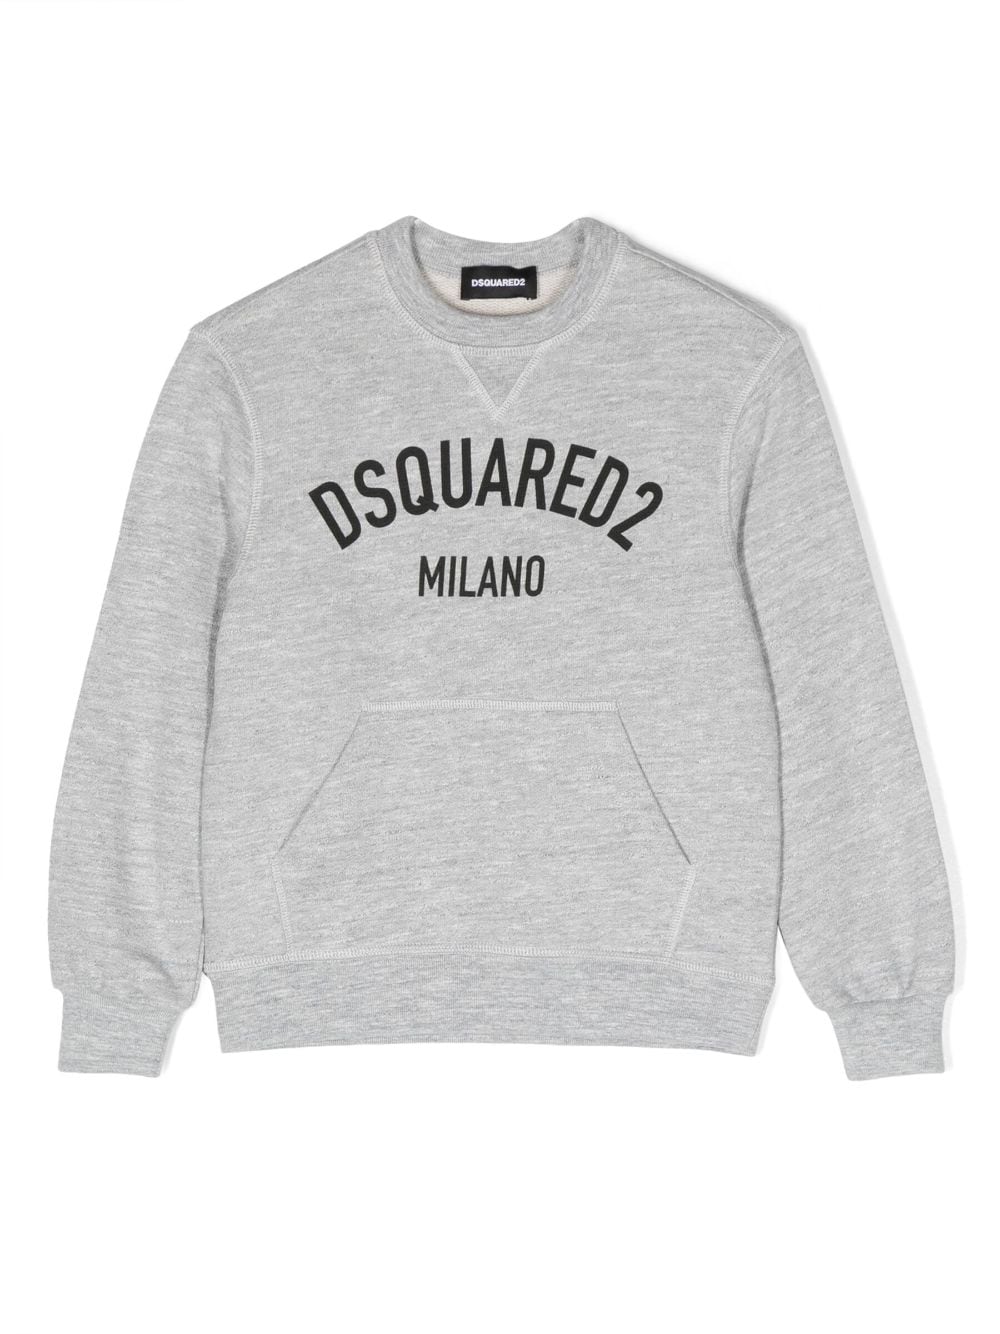 Gray sweatshirt for boys with black logo